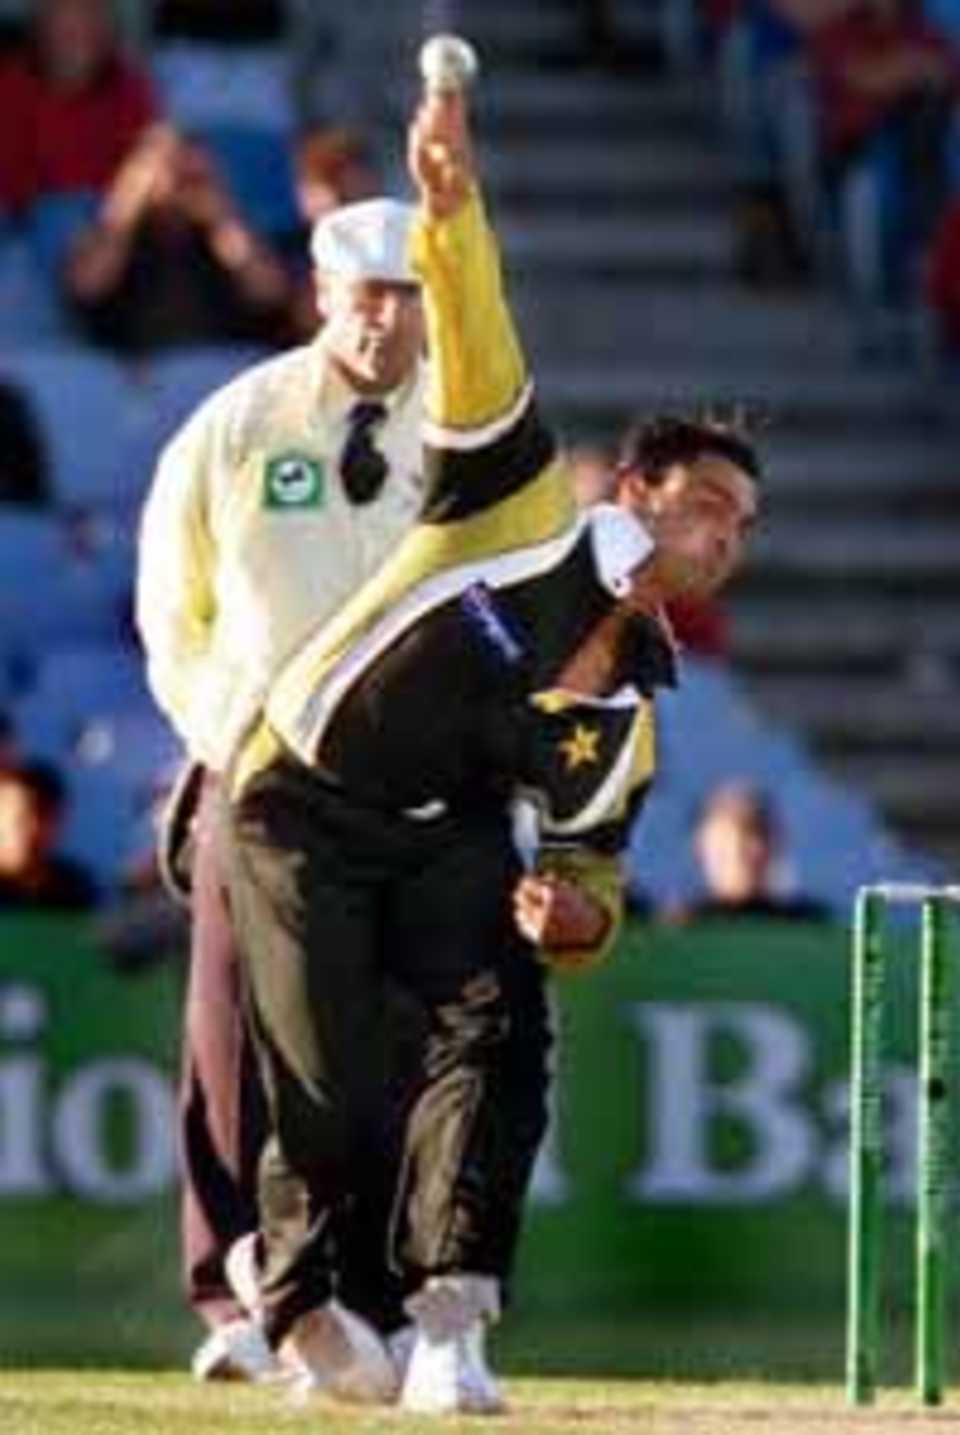 Shoaib Akhtar bowling in the 5th ODI at Dunedin v New Zealand 28 February 2001